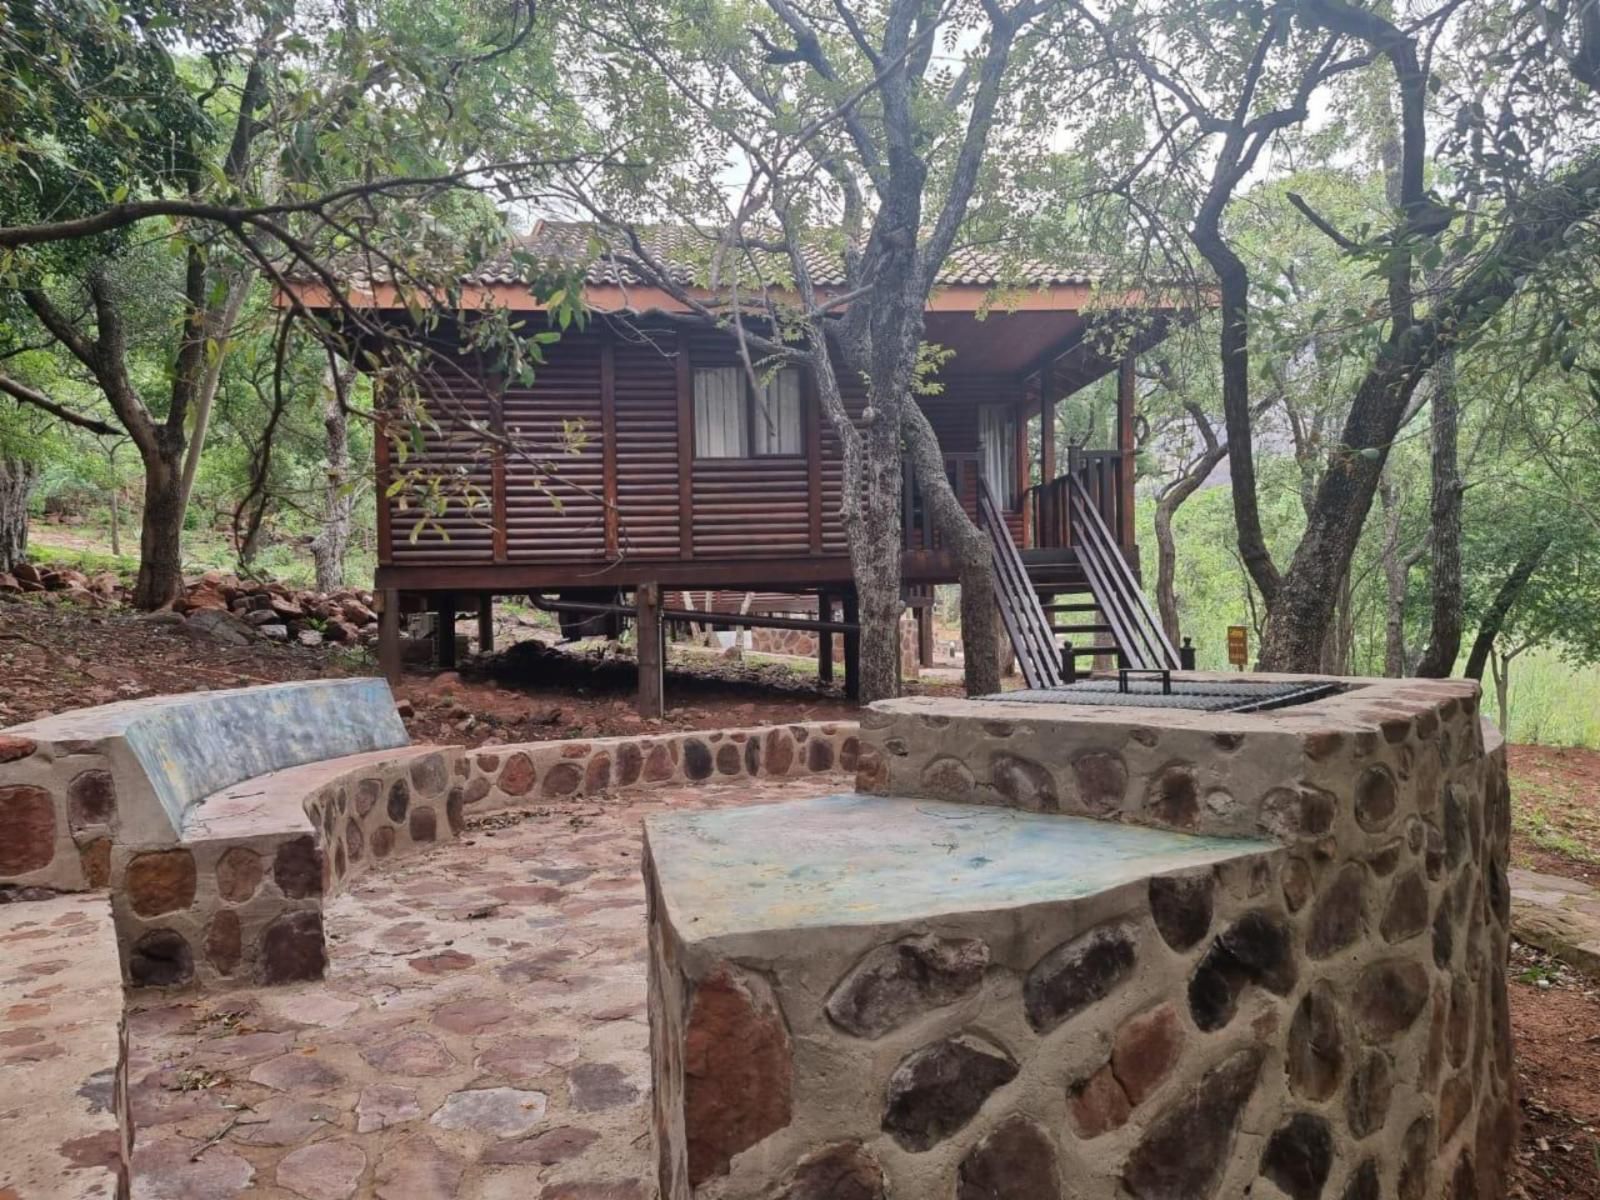 Waterfall Safari Lodge Kranspoort Mpumalanga South Africa Cabin, Building, Architecture